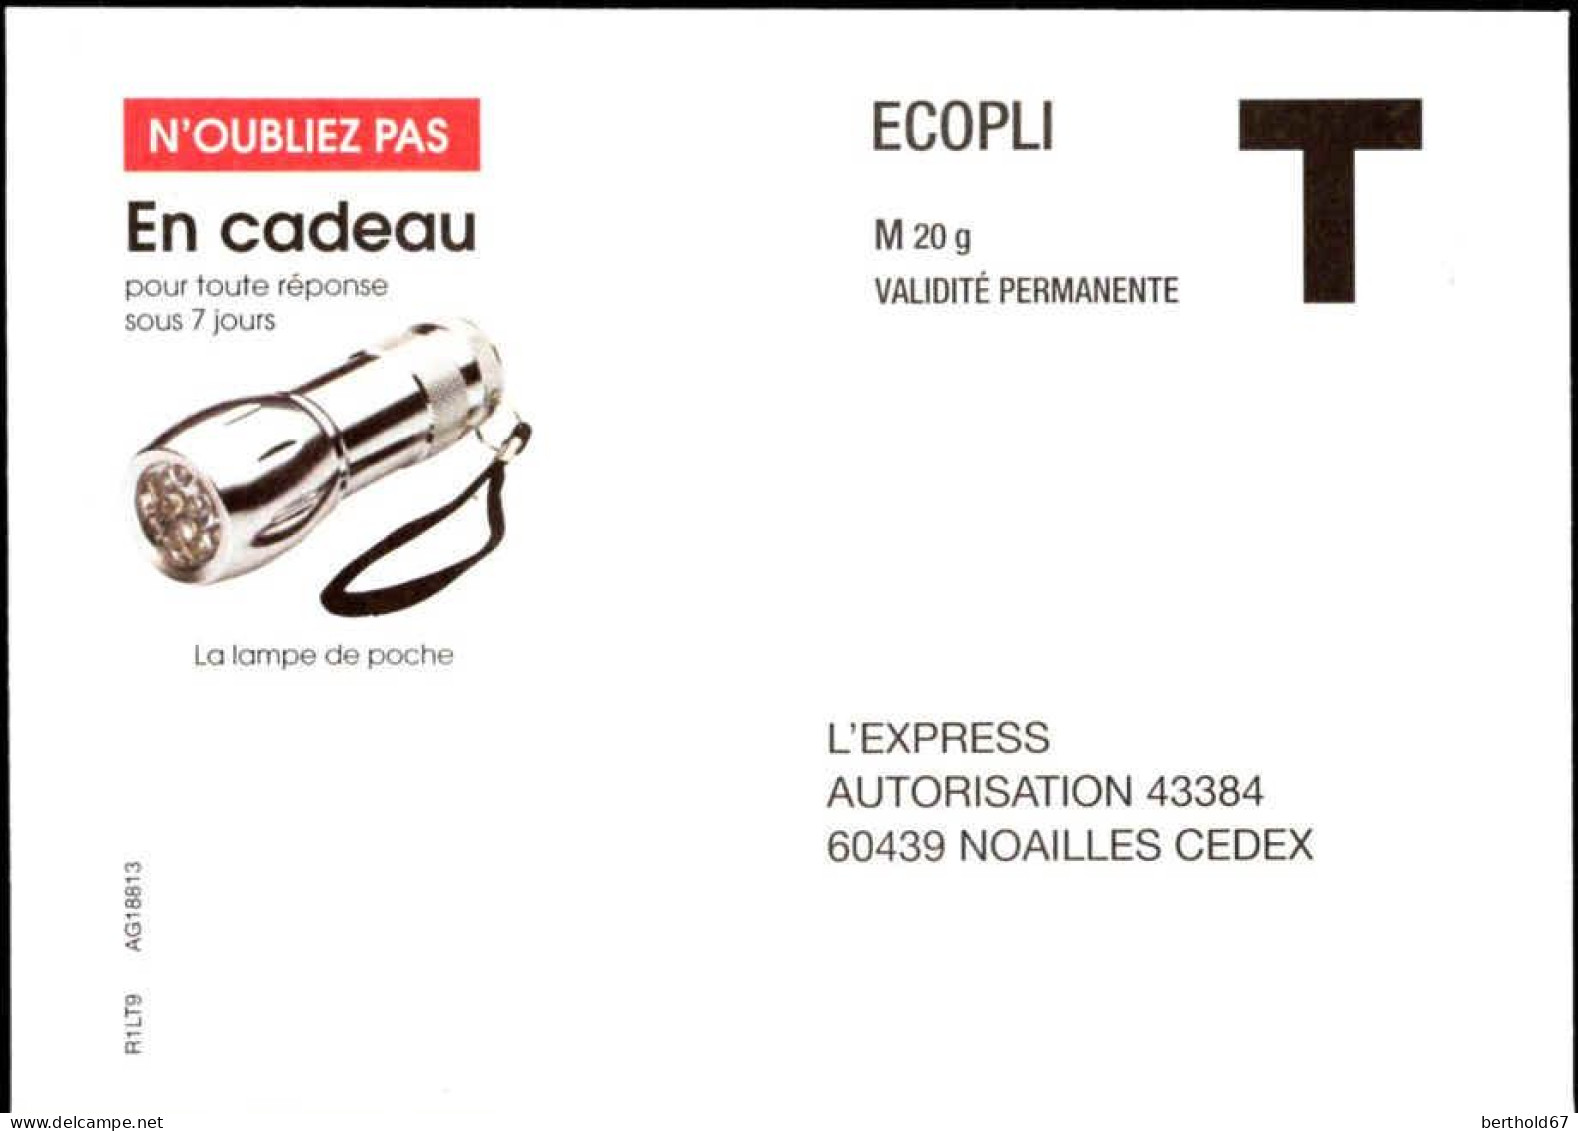 France Entier-P N** (7017) L'Express Autorisation 43384 Ecopli M20g V.permanente - Cards/T Return Covers